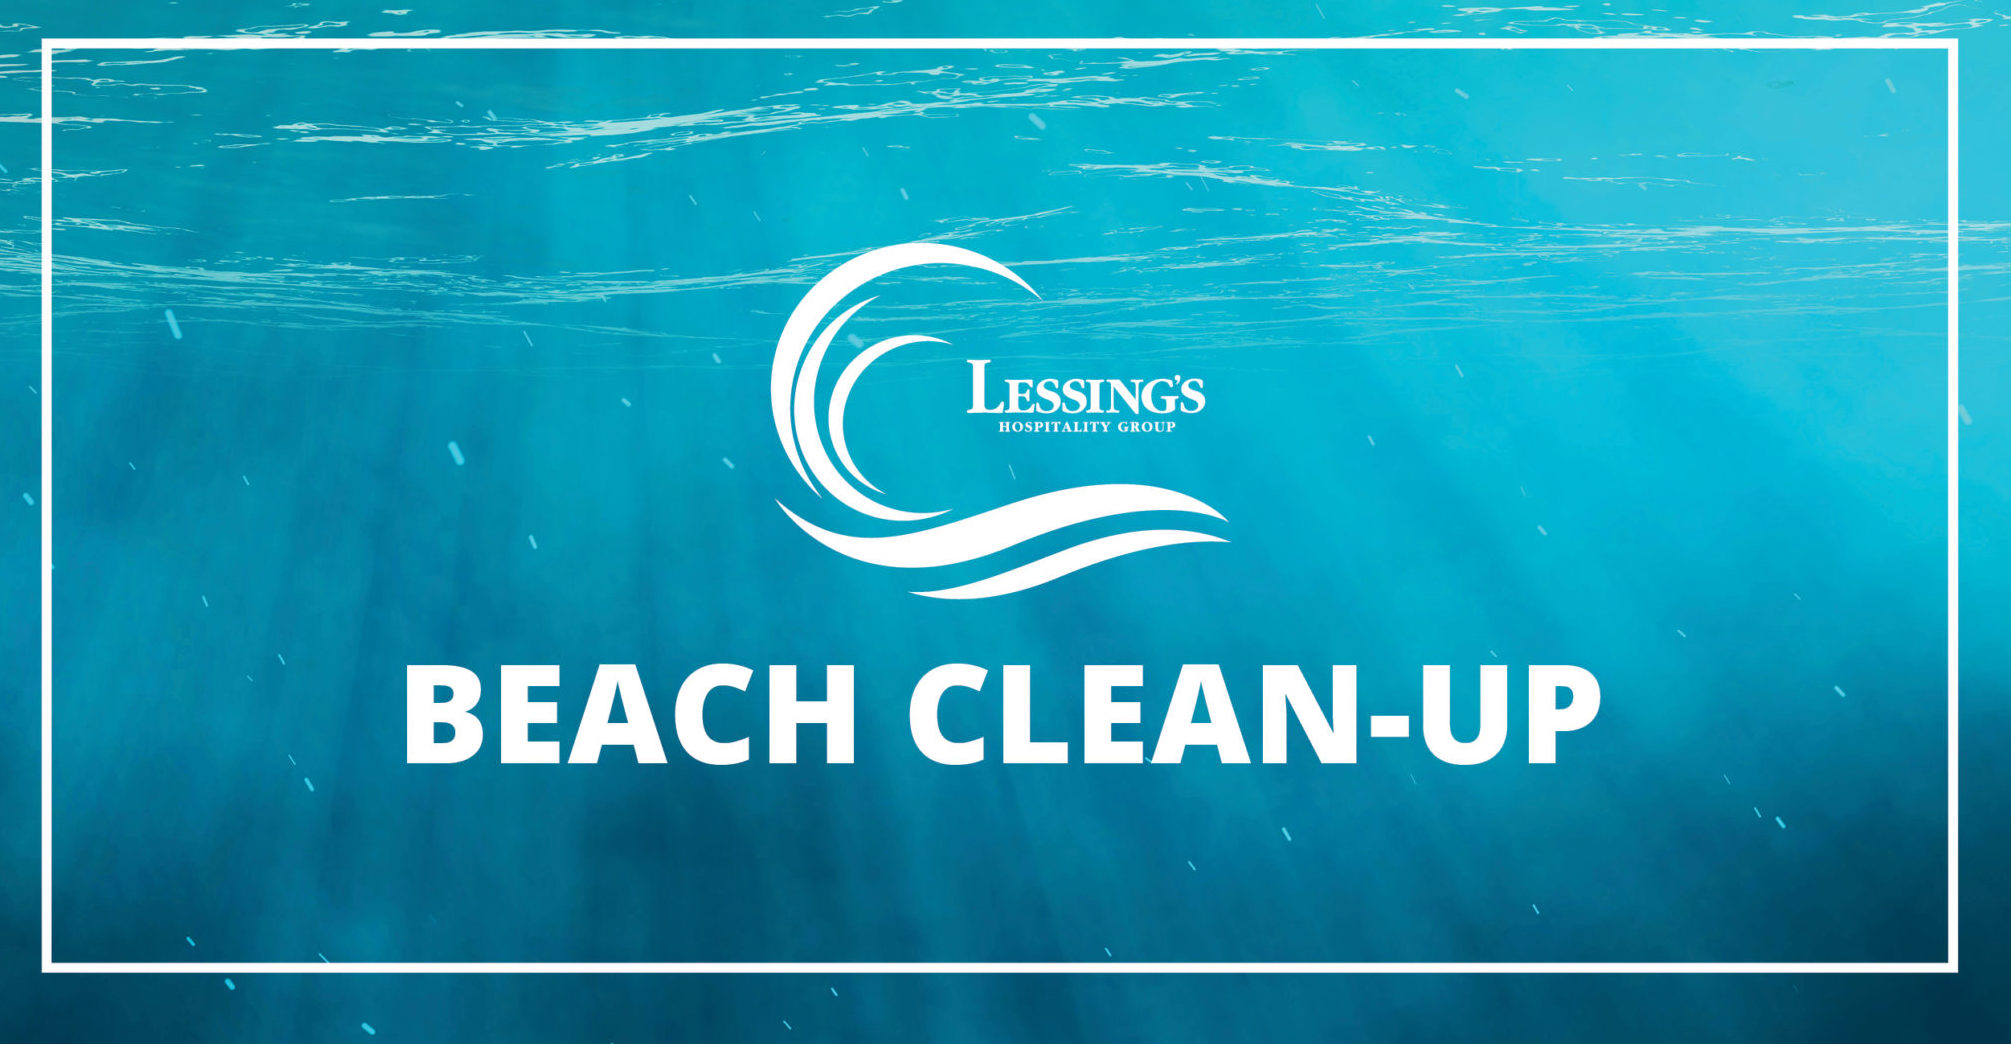 Lessing’s Beach Clean Up